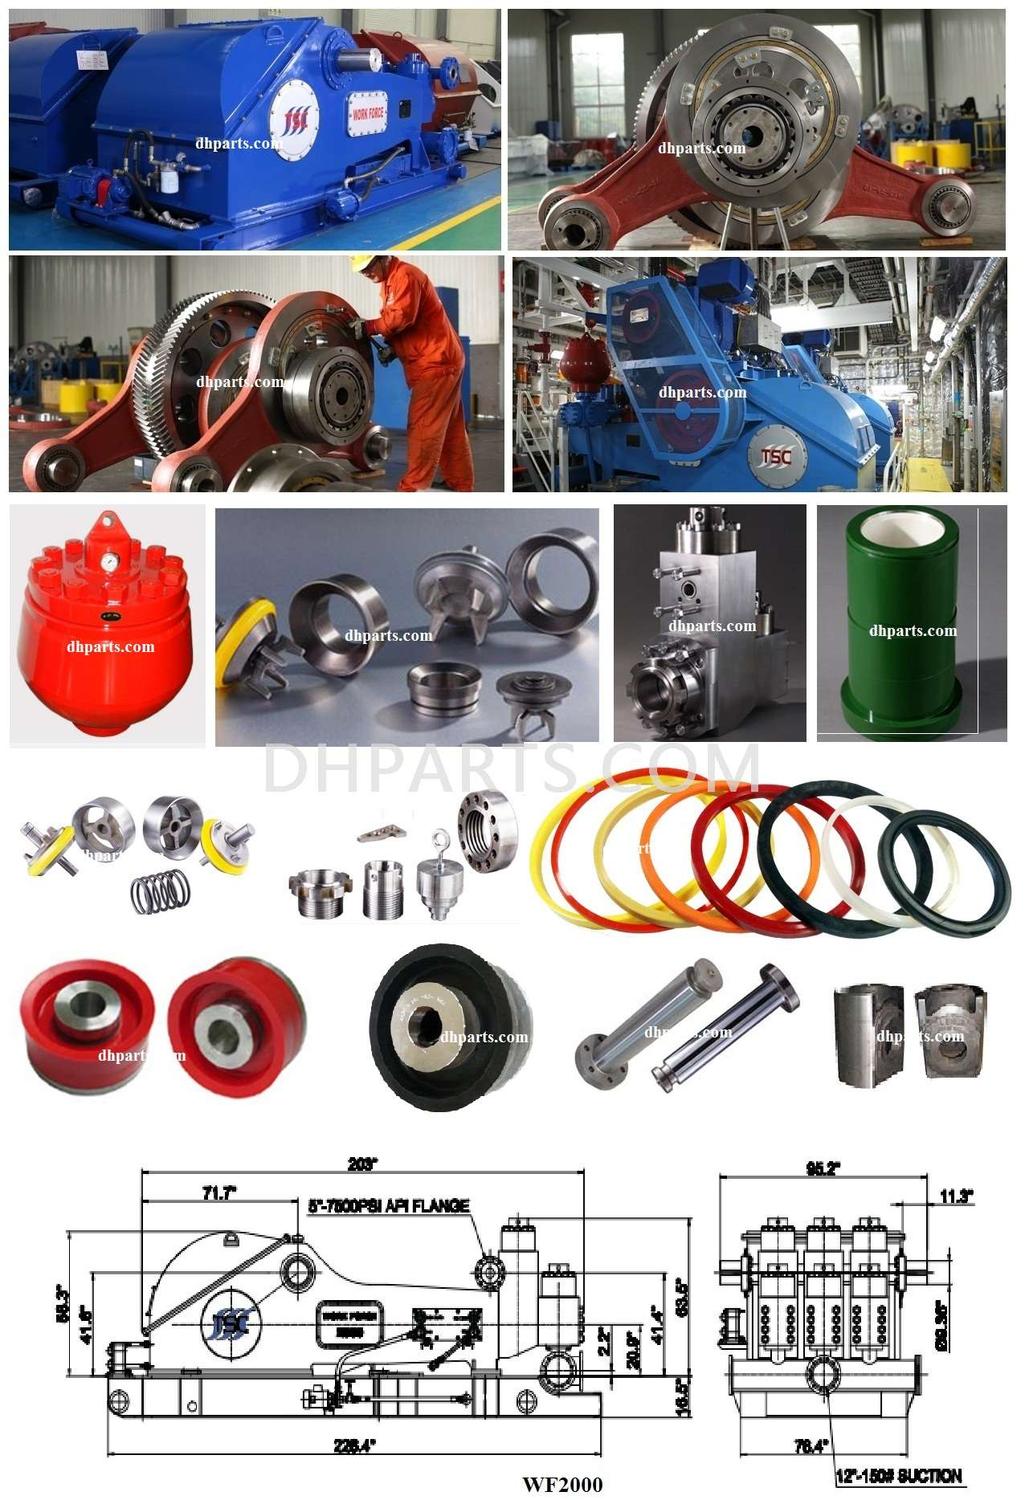 TSC Mud Pump Parts Crankshaft,Connecting Rod,Crosshead,Bull Gear,pinion shaft,connect rod,pulsation dampener